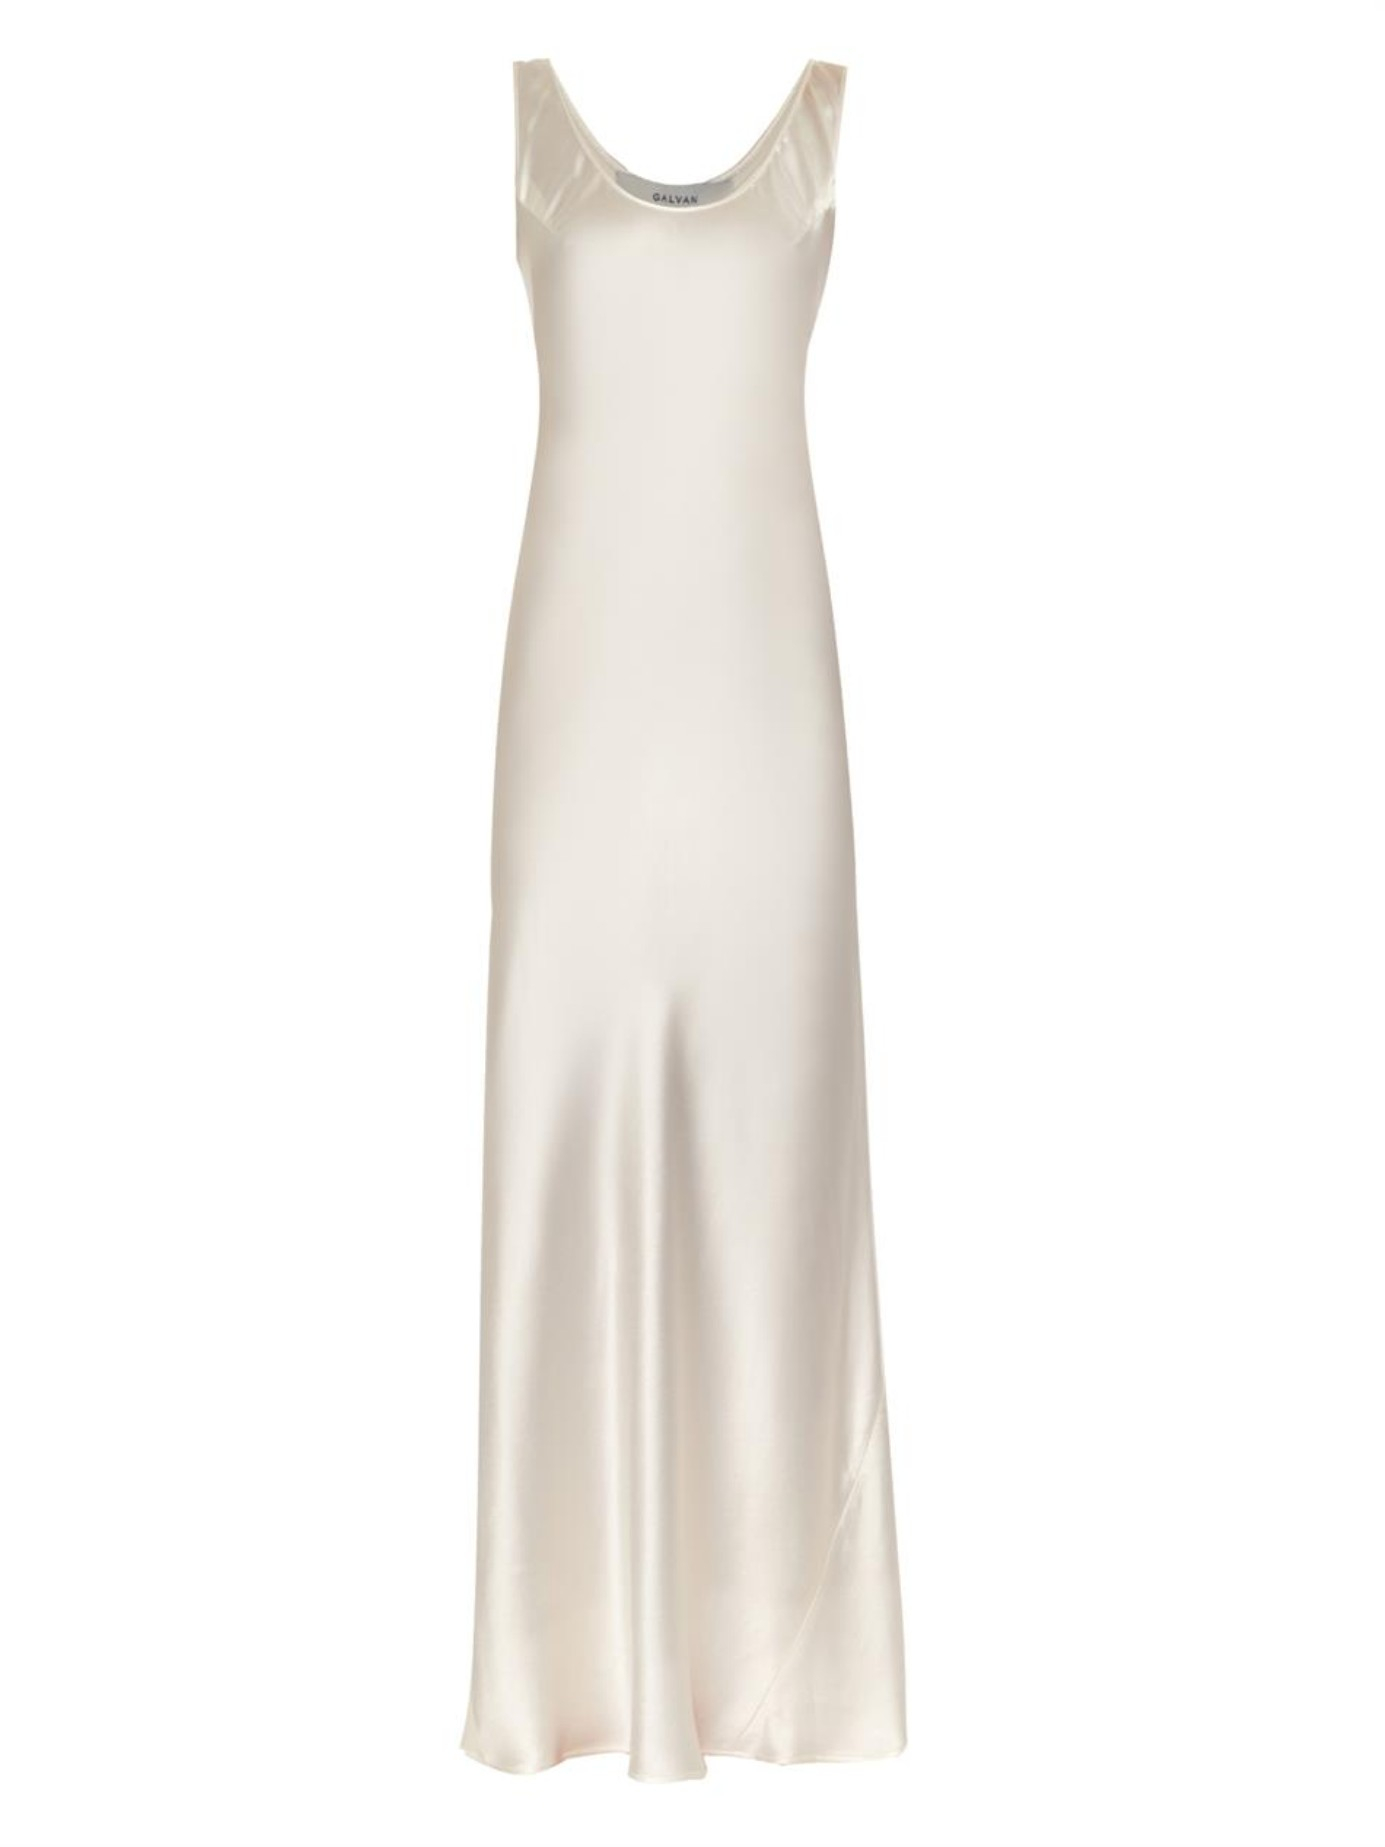 Galvan london Silk Bias-Cut Gown in White | Lyst